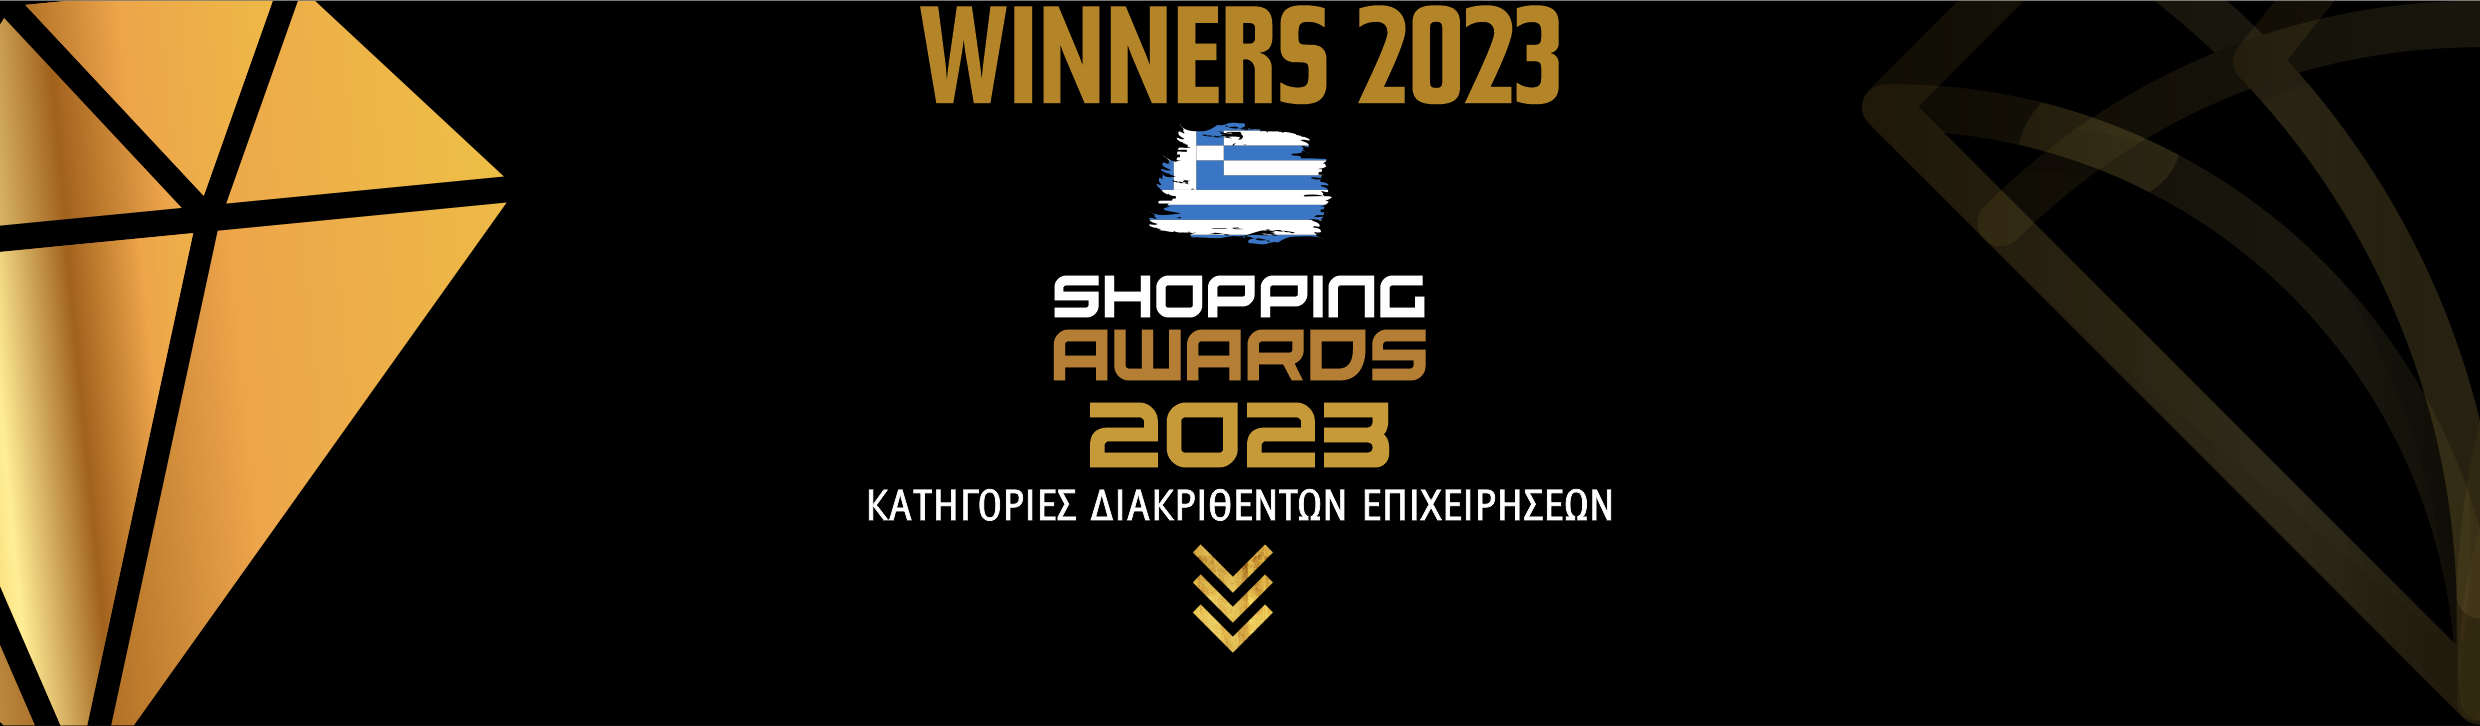 shopping_awards_2023